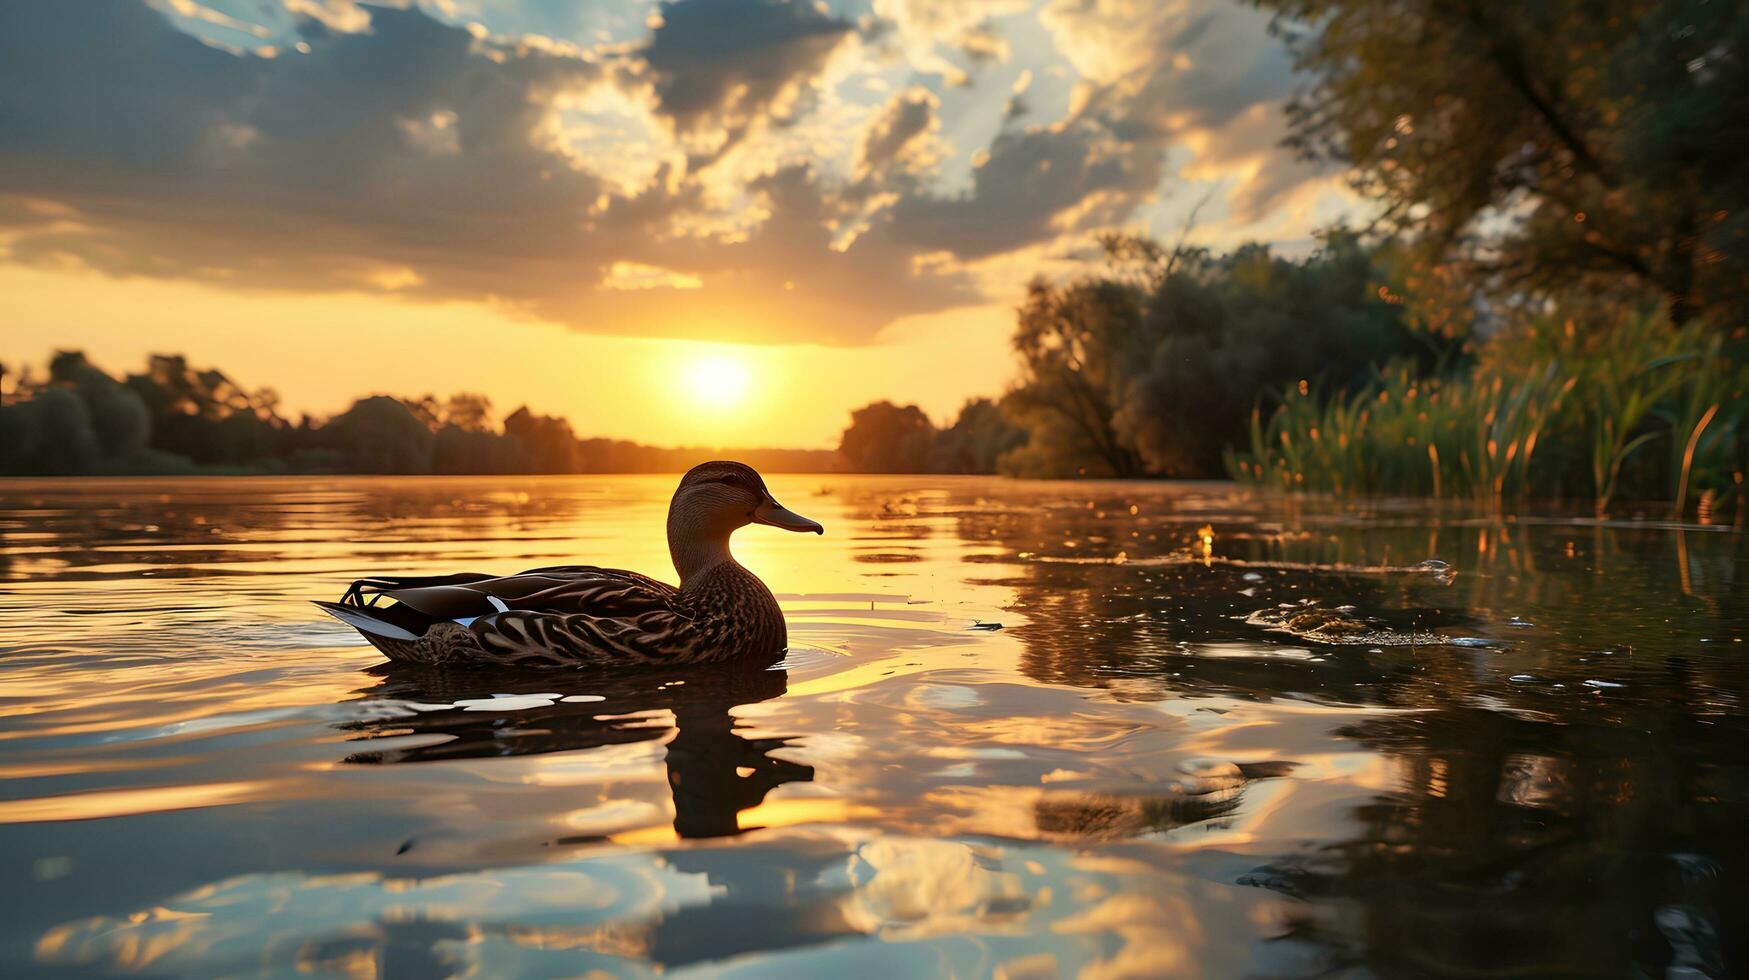 AI generated Mallard Duck Basking in the Serene Sunset by the Lake photo